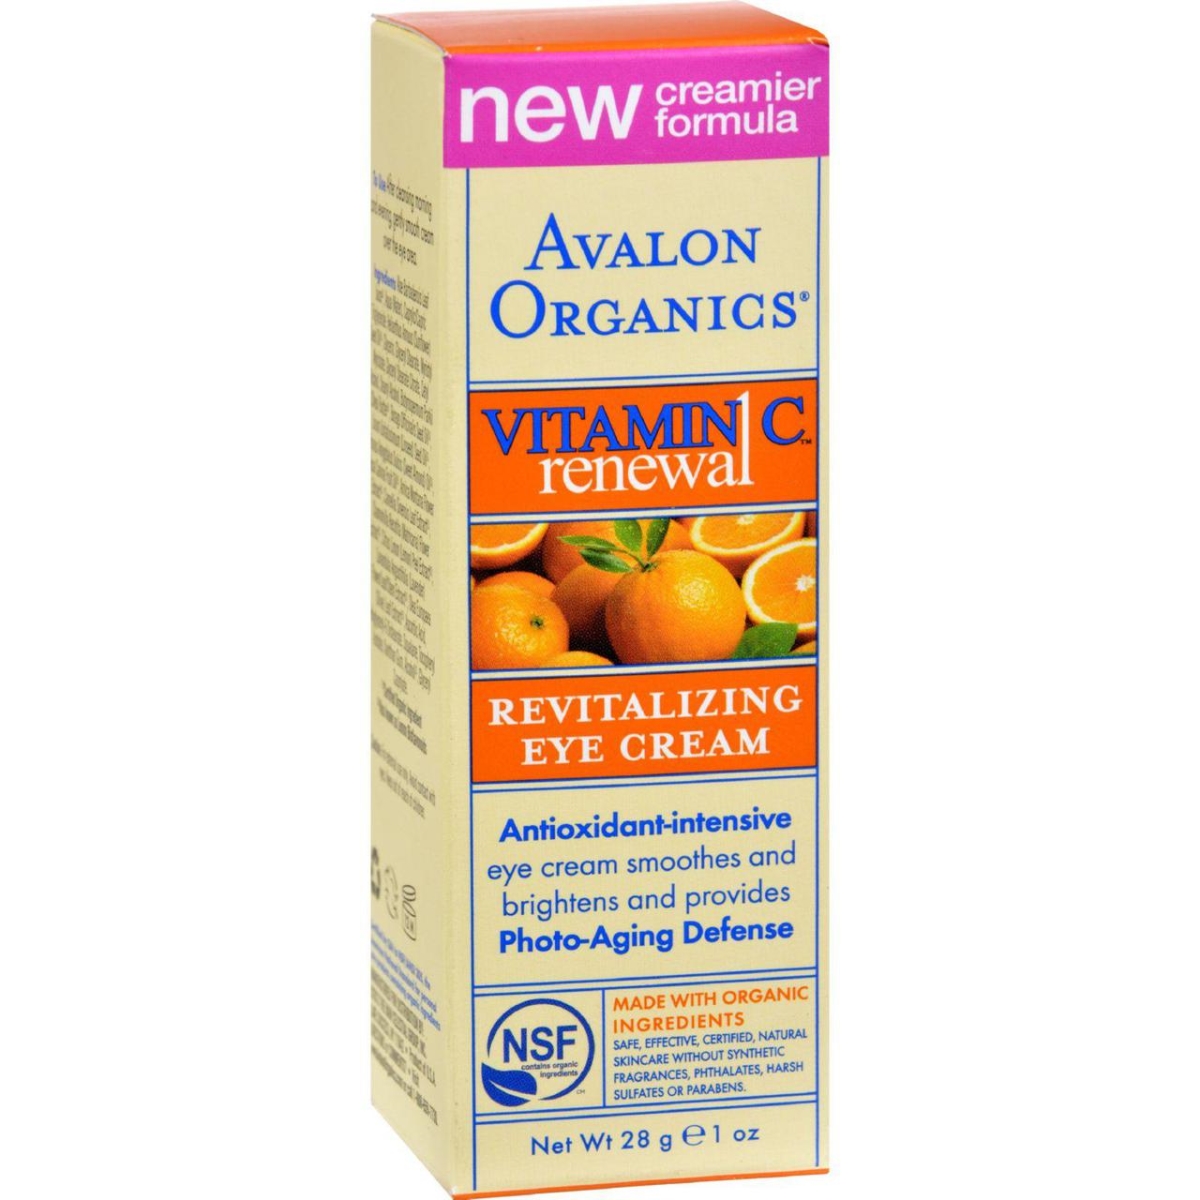 Hg0901520 1 Fl Oz Organics Revitalizing Eye Cream Vitamin C